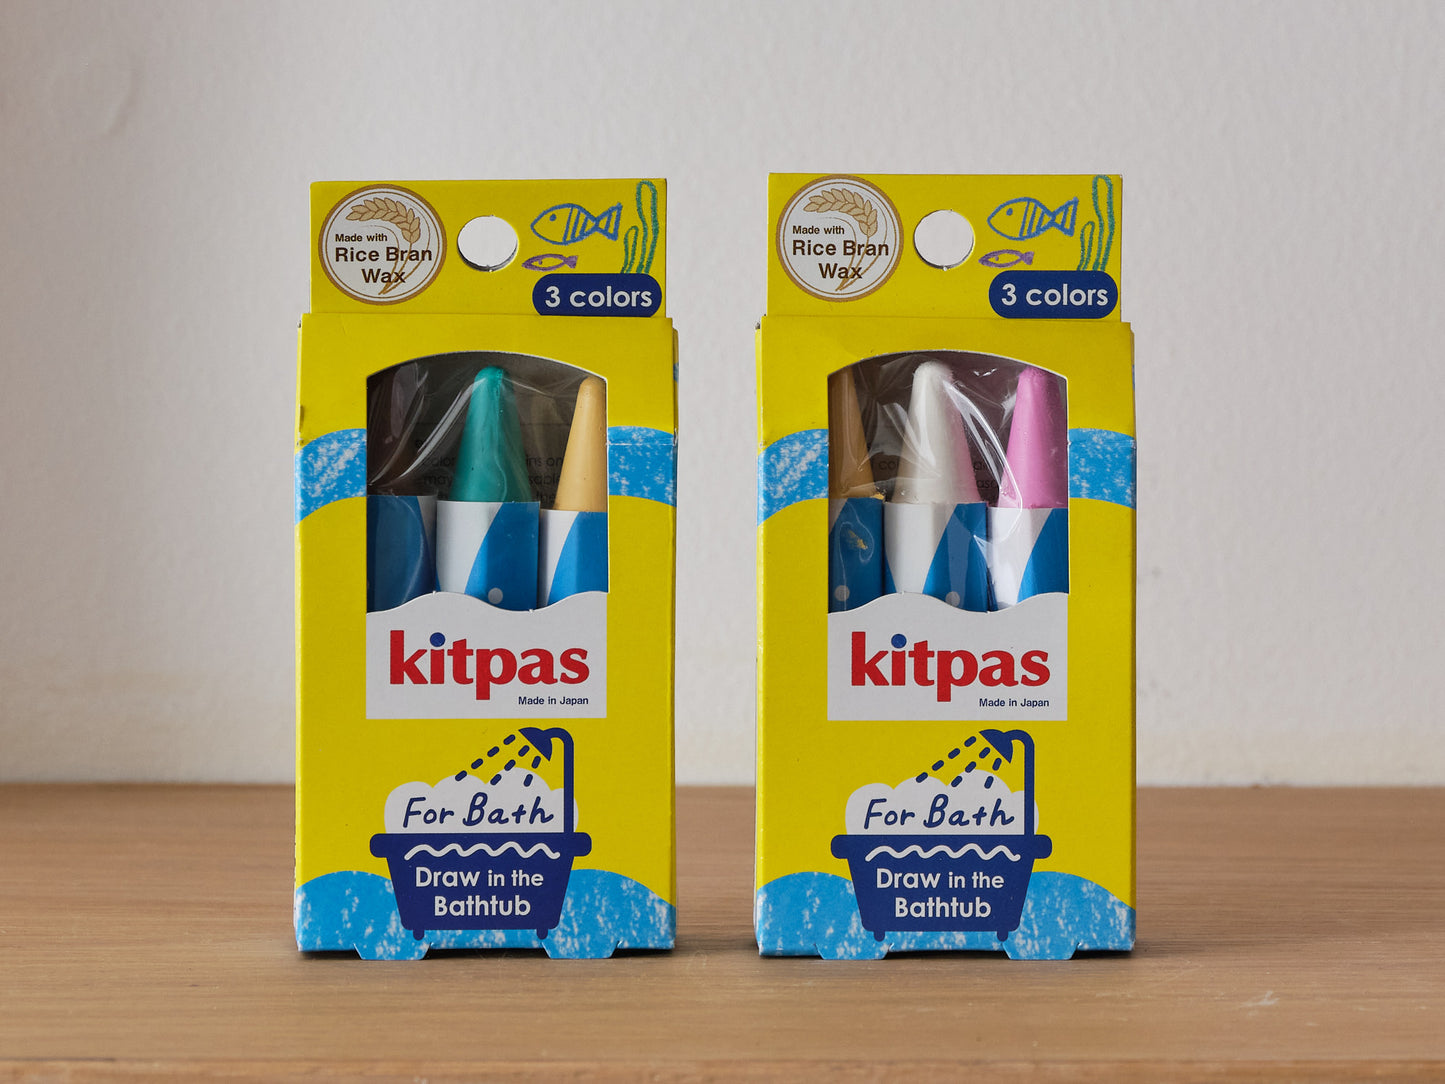 Kitpas Rice Wax Bath Crayons 3 Colours - Fish (Purple Blue Green)